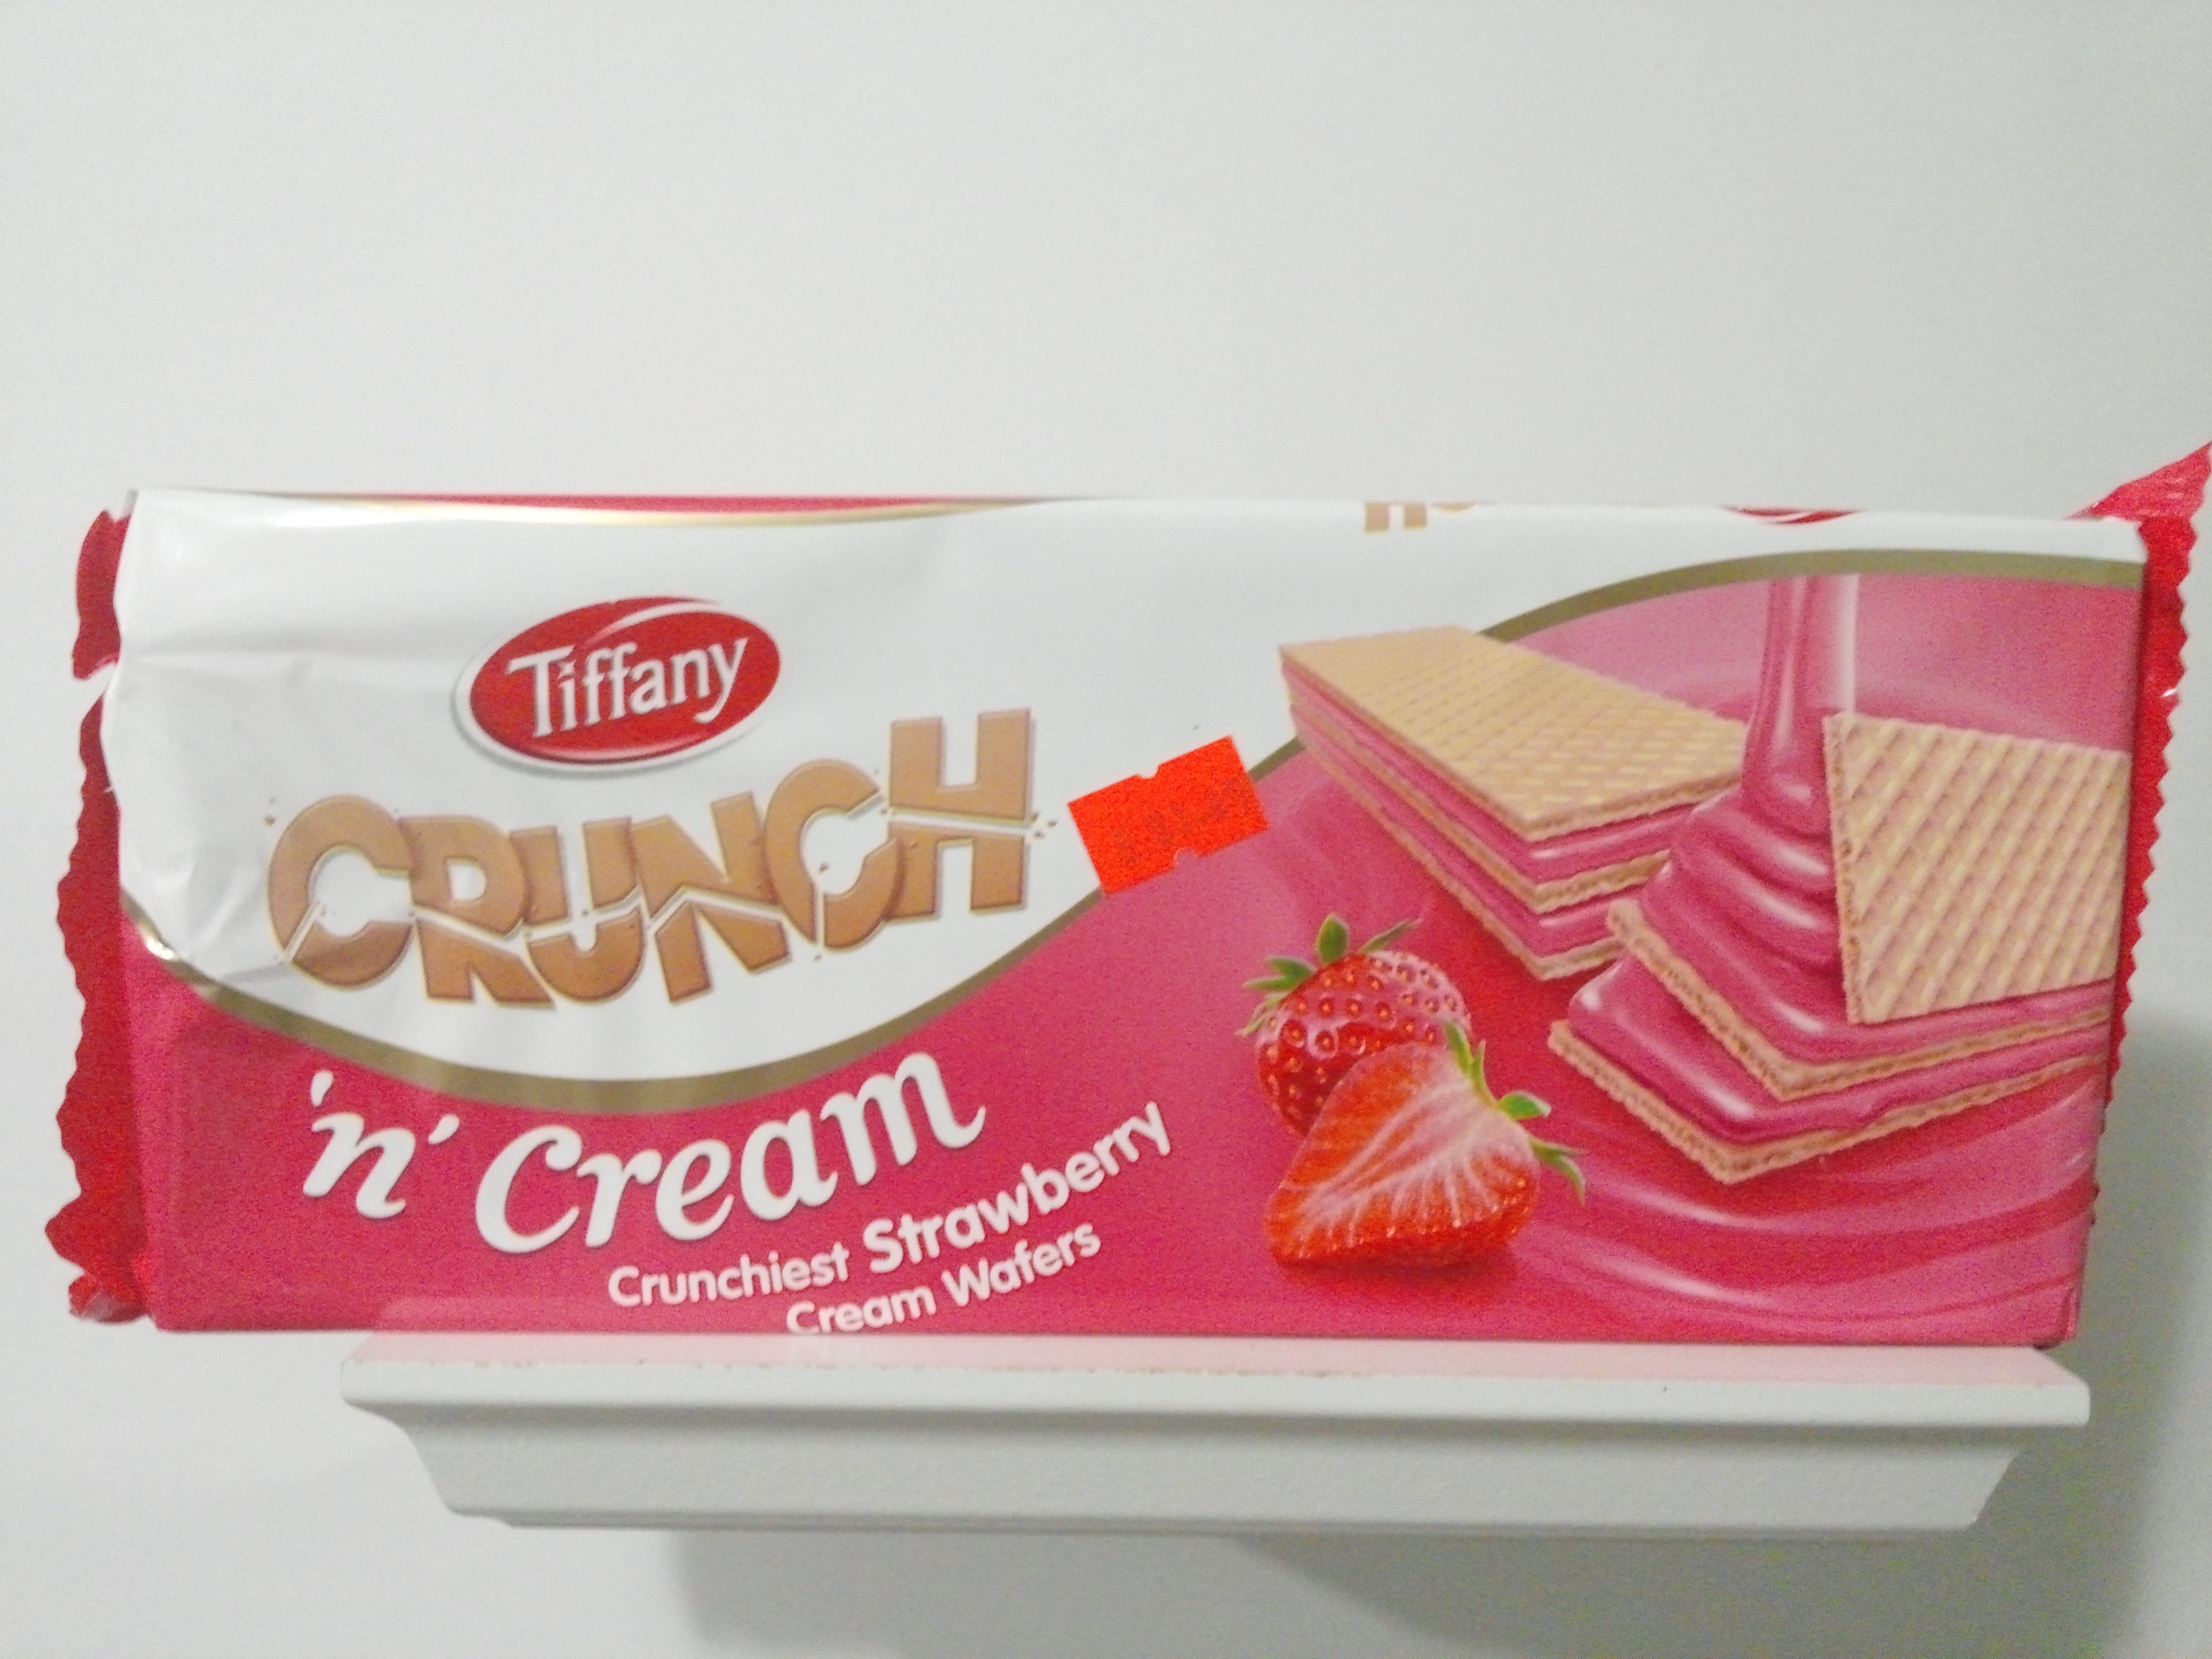 Tiffany Crunchiest Strawberry Cream Wafers 5.38 oz 